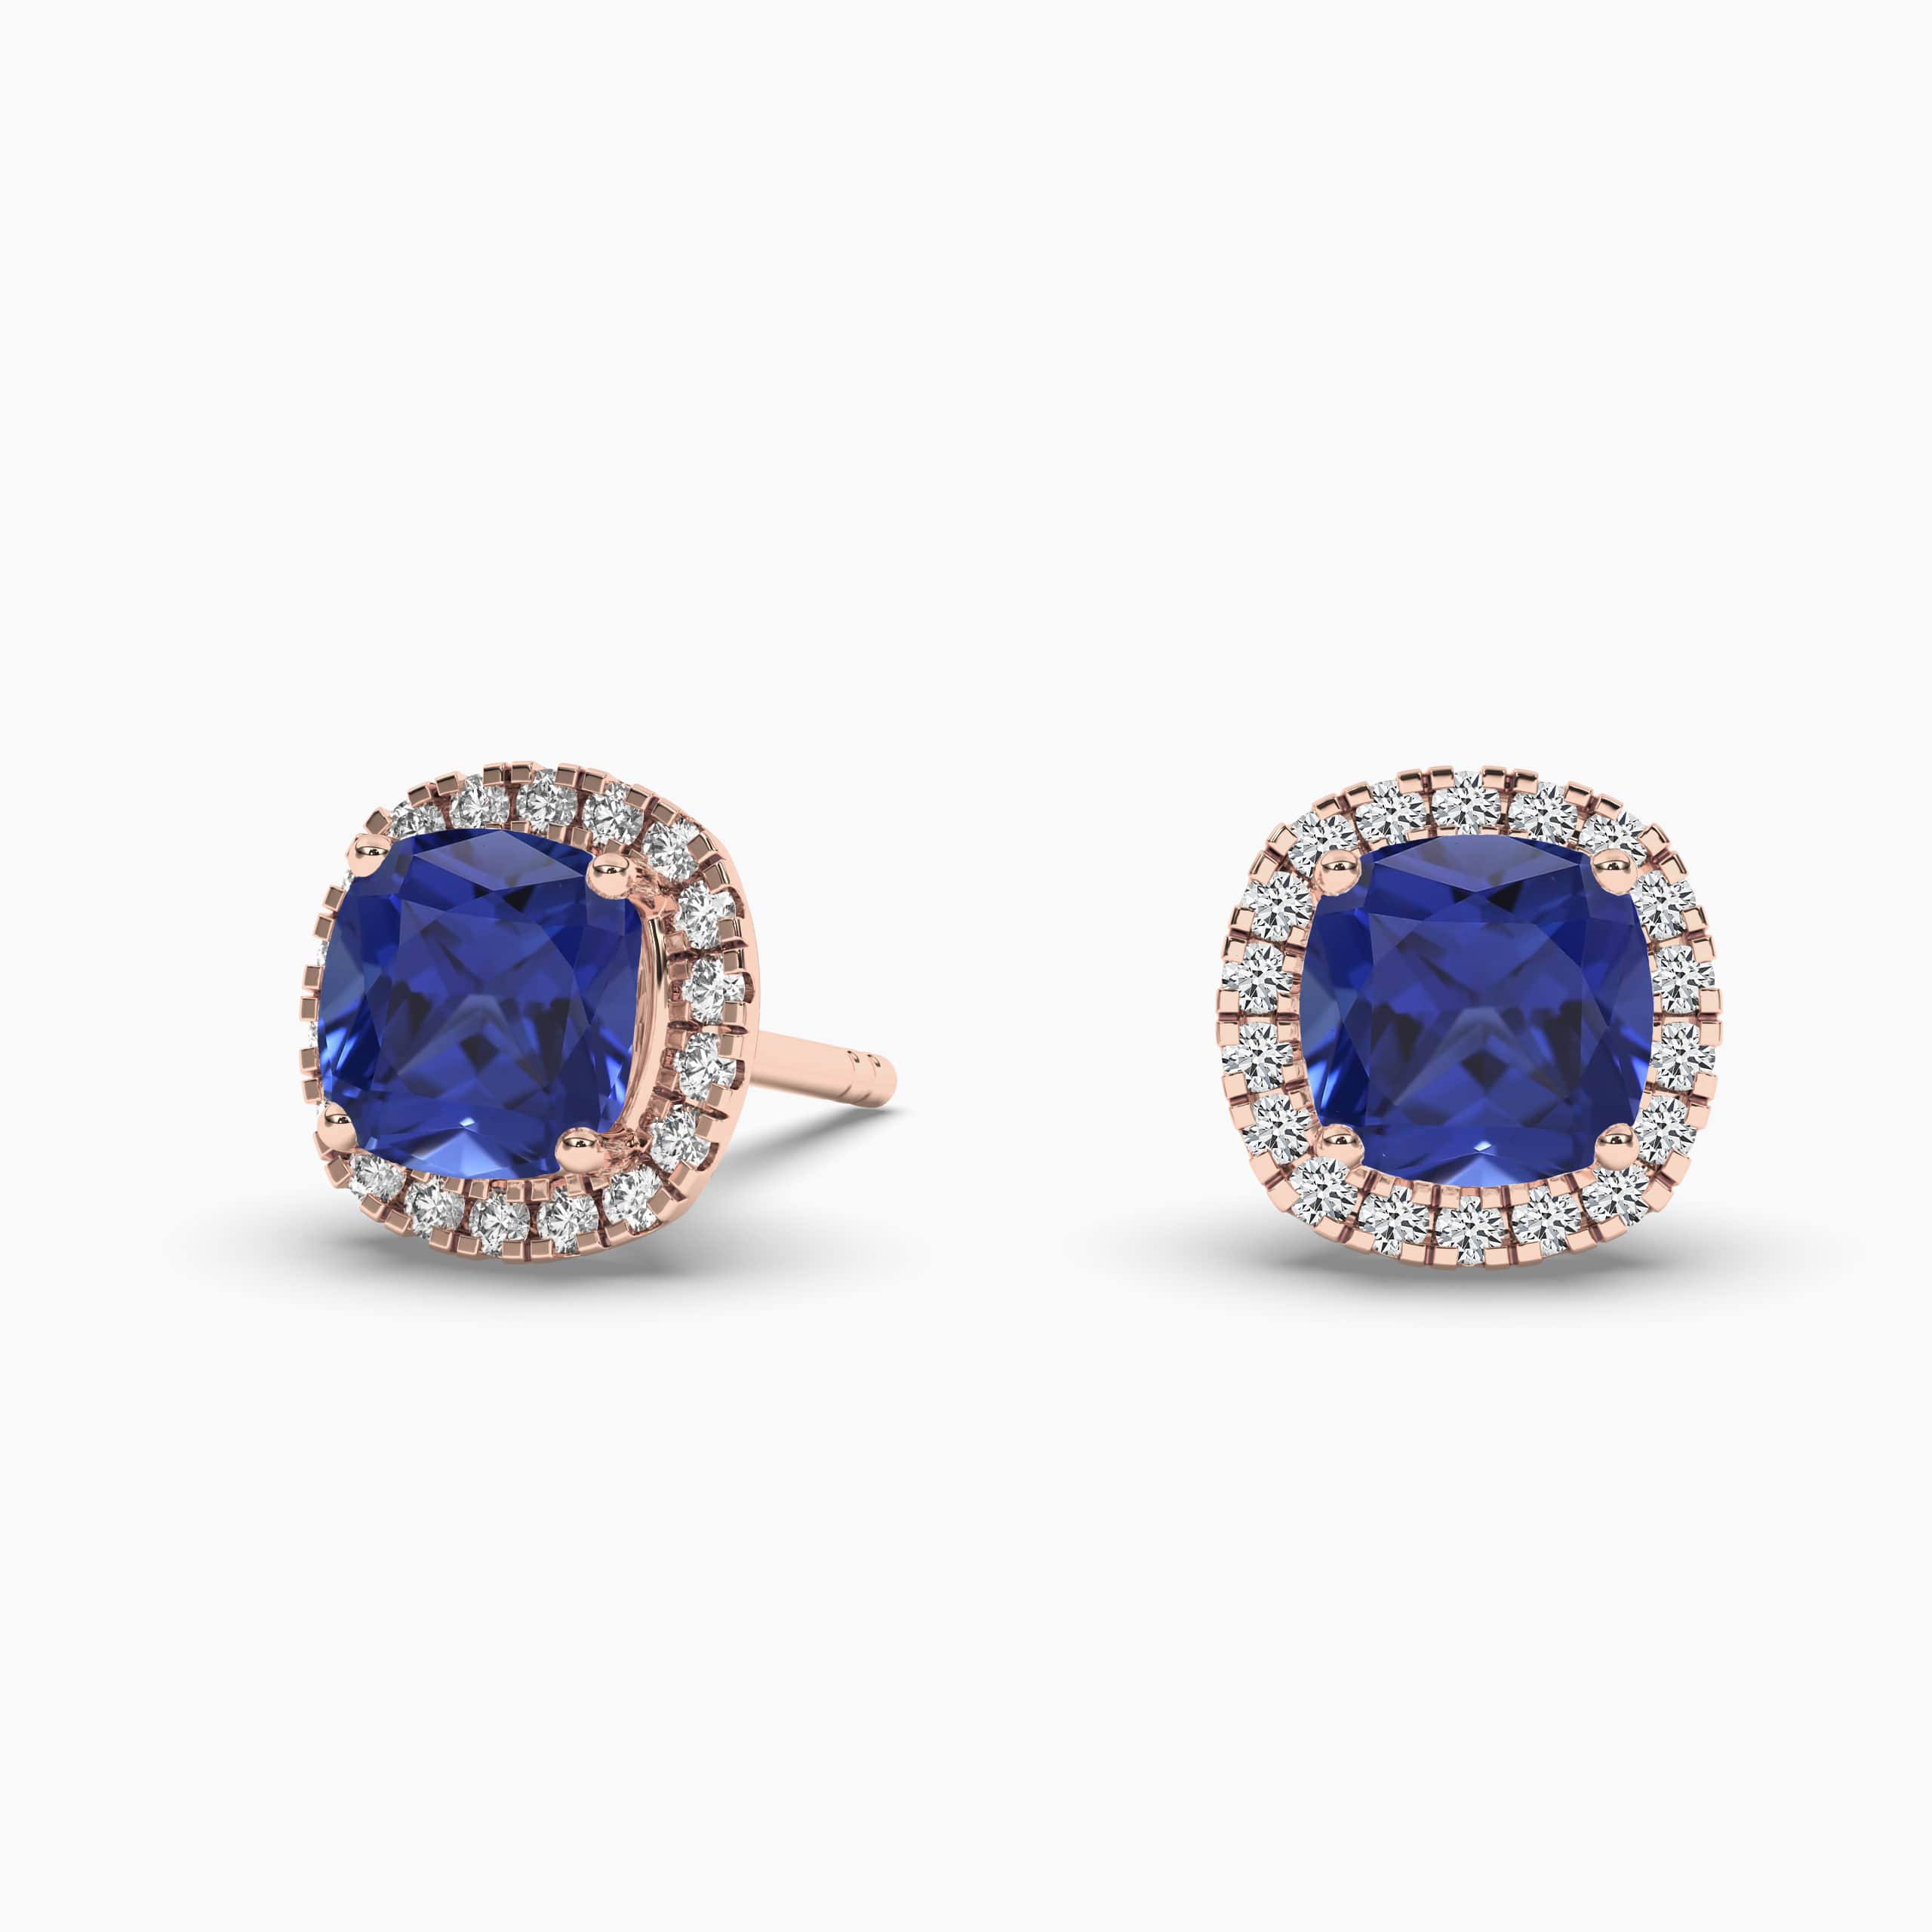 HALO CUSHION BLUE SAPPHIRE & DIAMOND EARRINGS ROSE GOLD 